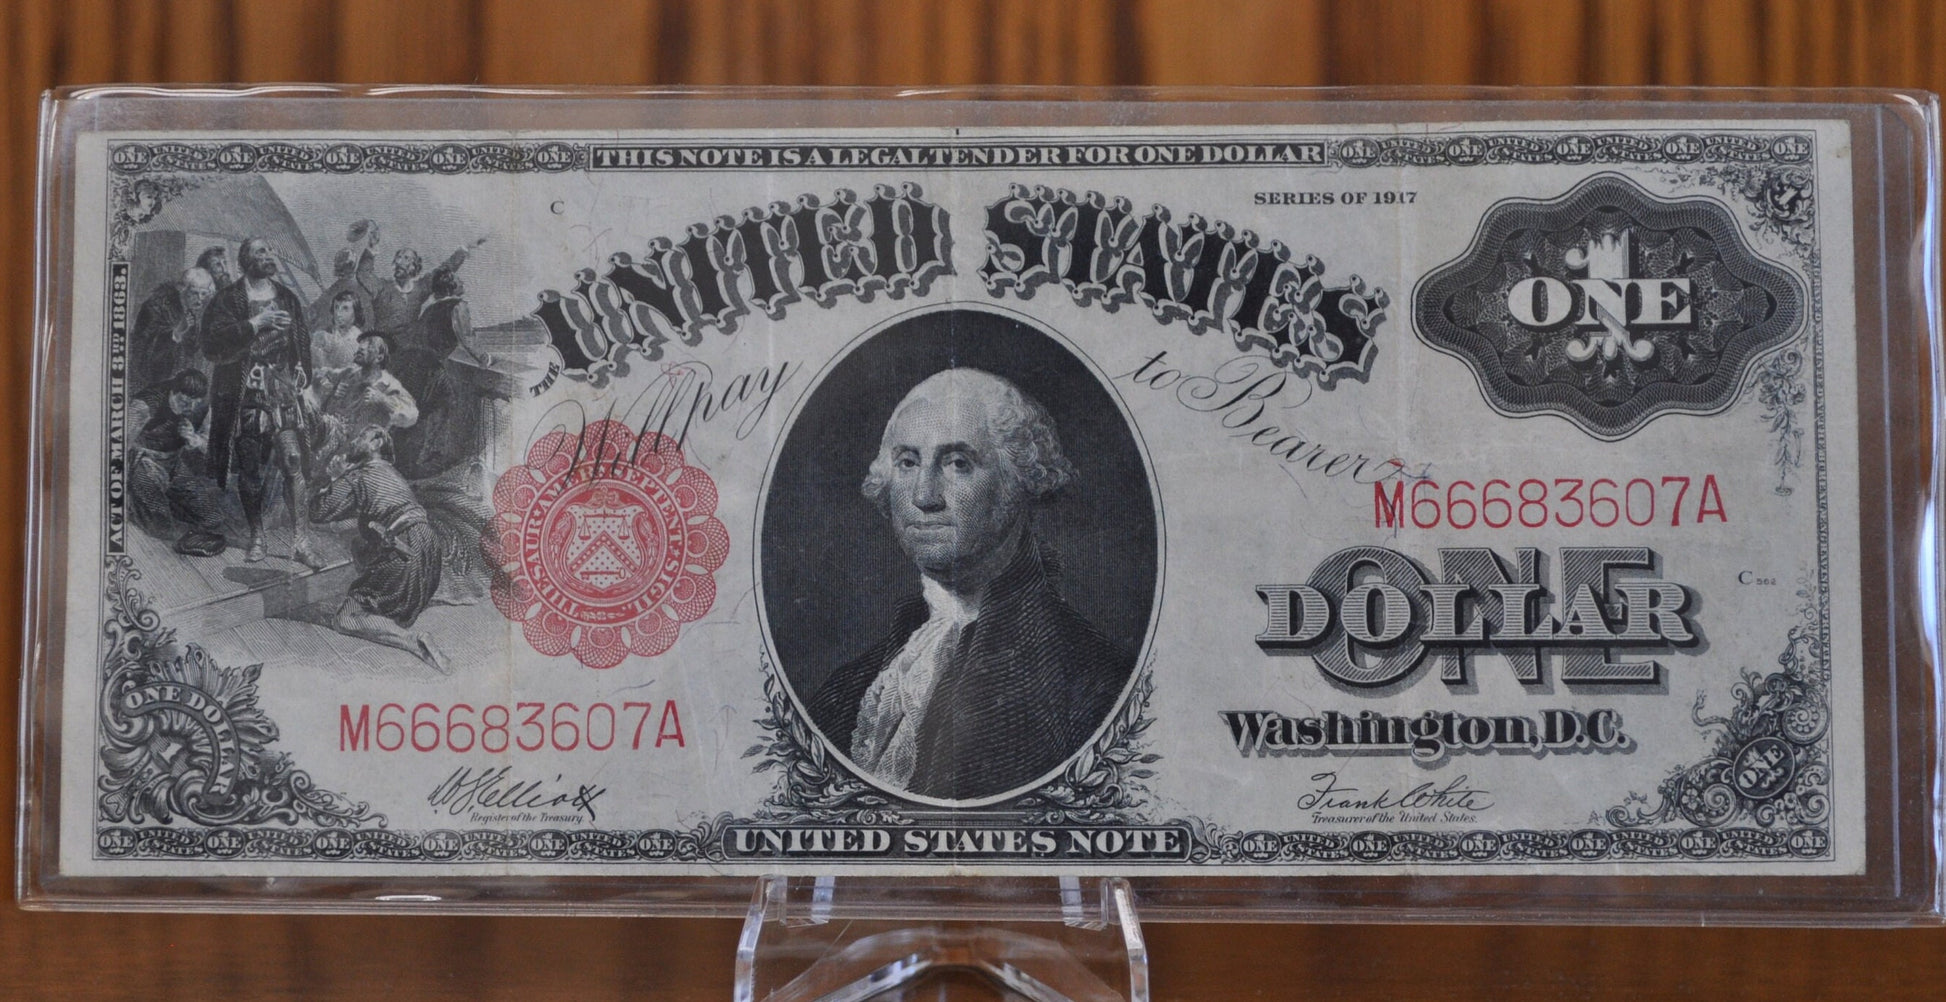 1917 1 Dollar Bill Legal Tender - XF (Extremely Fine) Grade / Condition - 1917 Horse Blanket Note 1 Dollar Bill Large 1917 Fr#37 / Fr.37